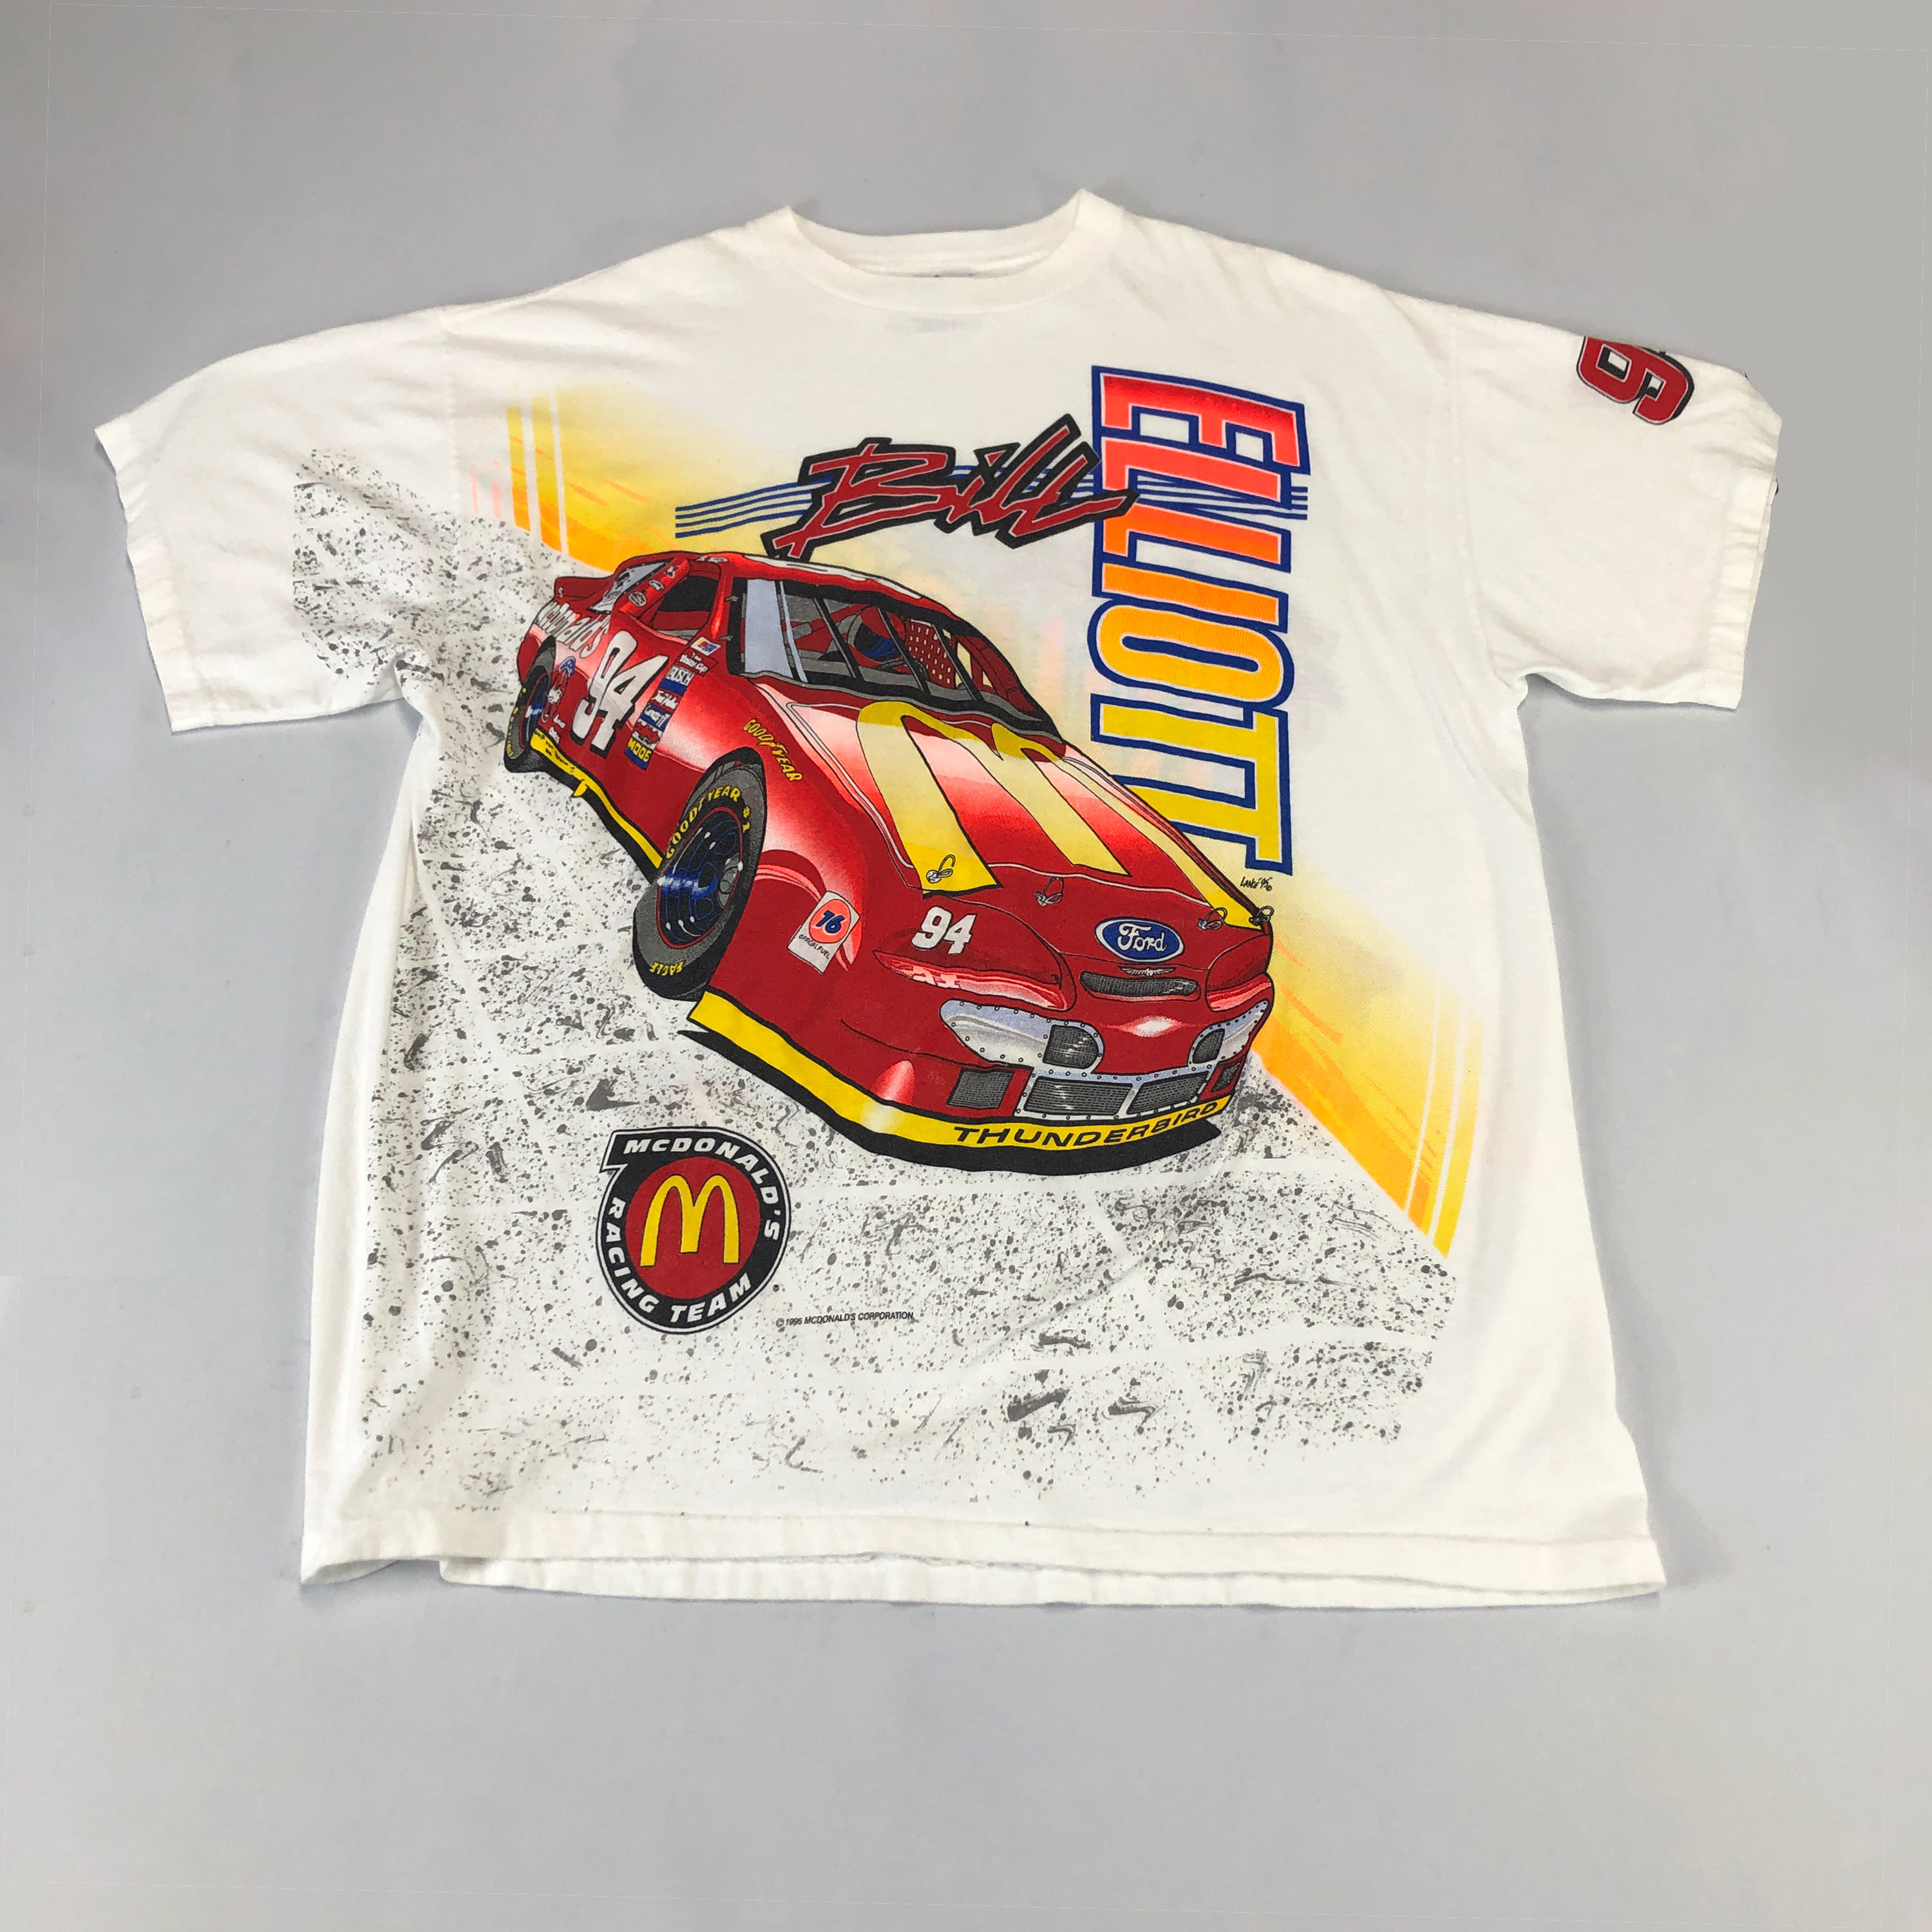 [Kudzu] Emblem Car T-shirt - Size XL